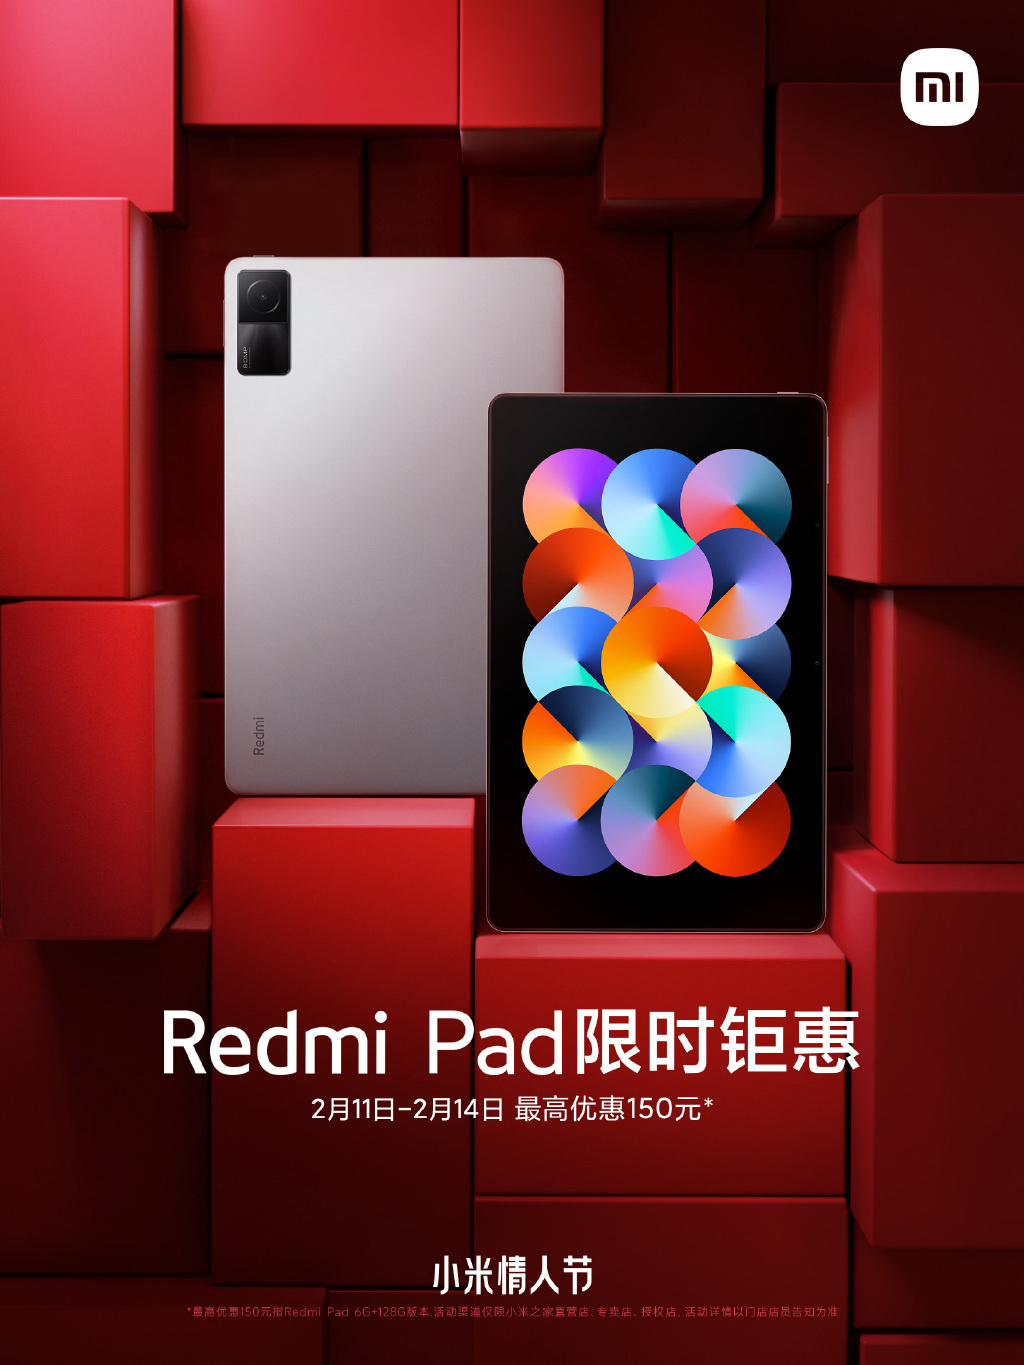 Совместимость Redmi Note 8 Pro